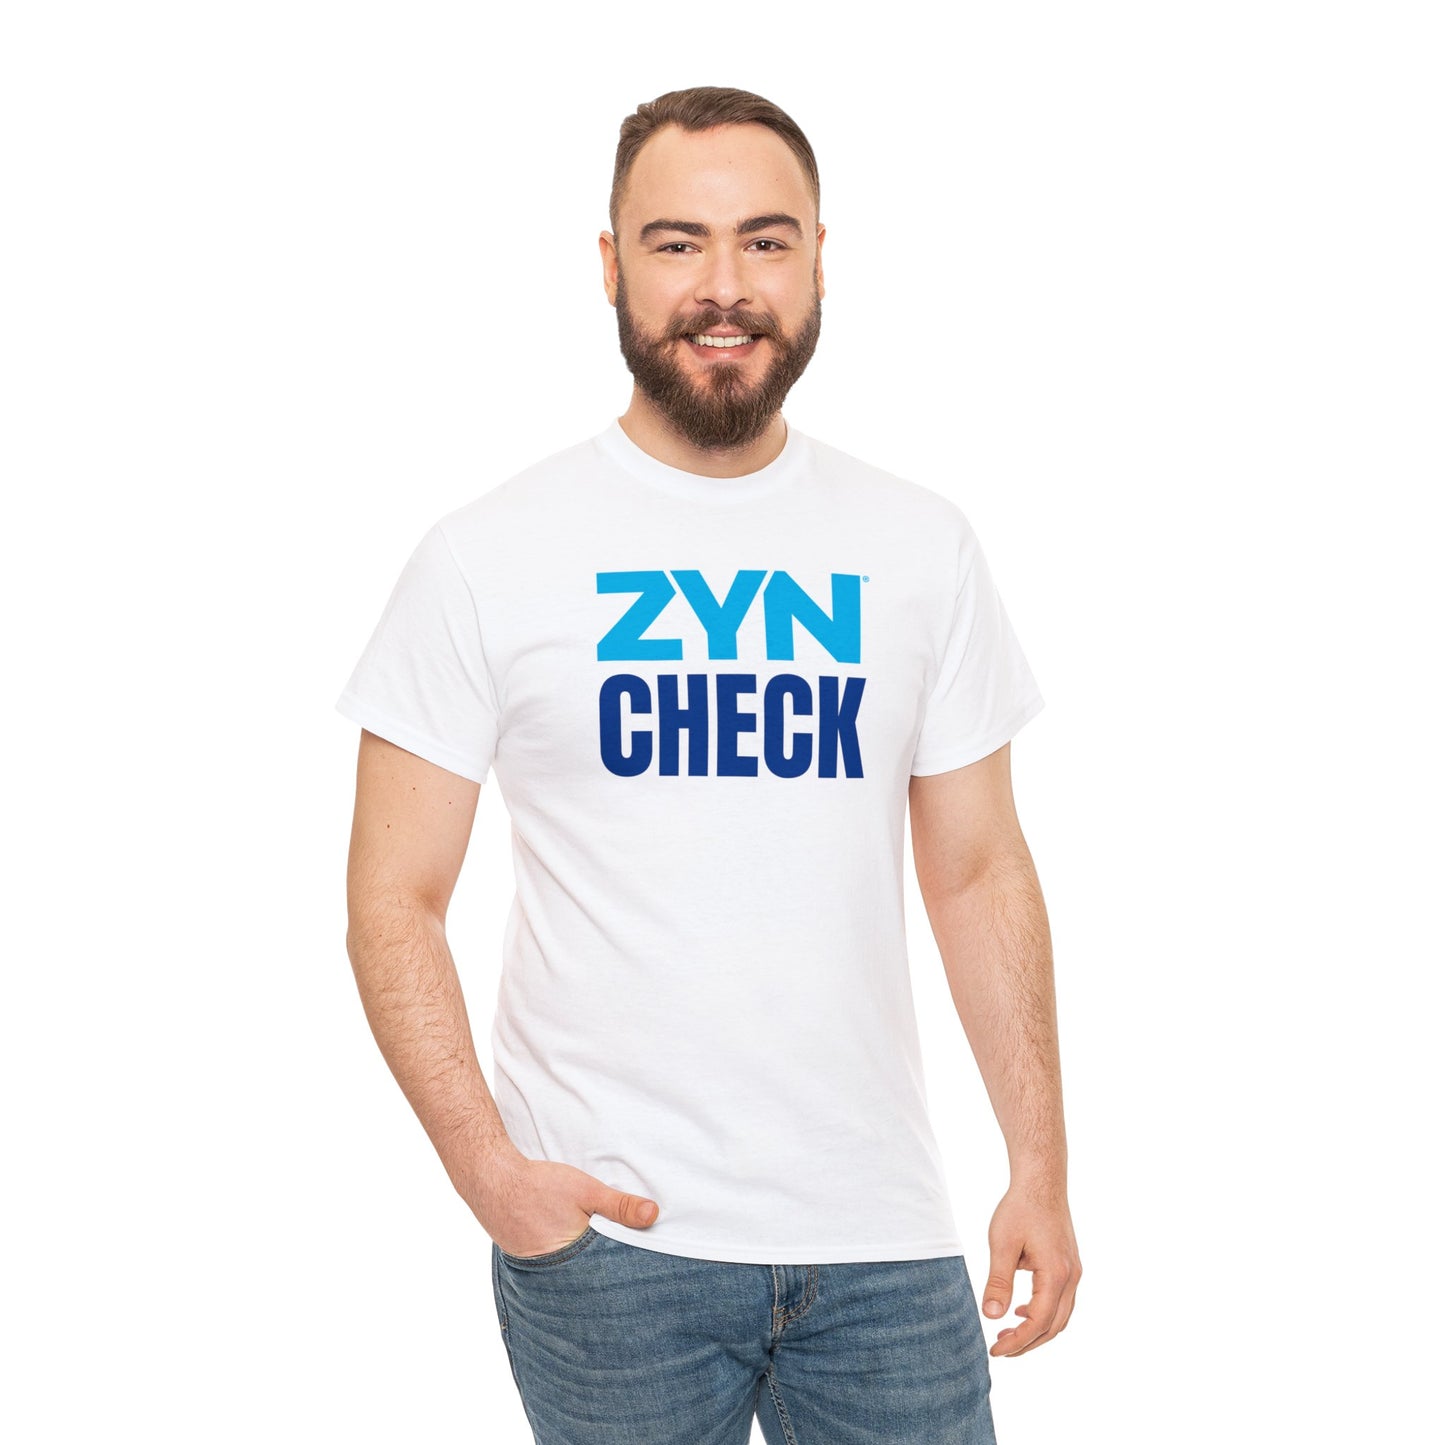 "ZYN Check" Tee